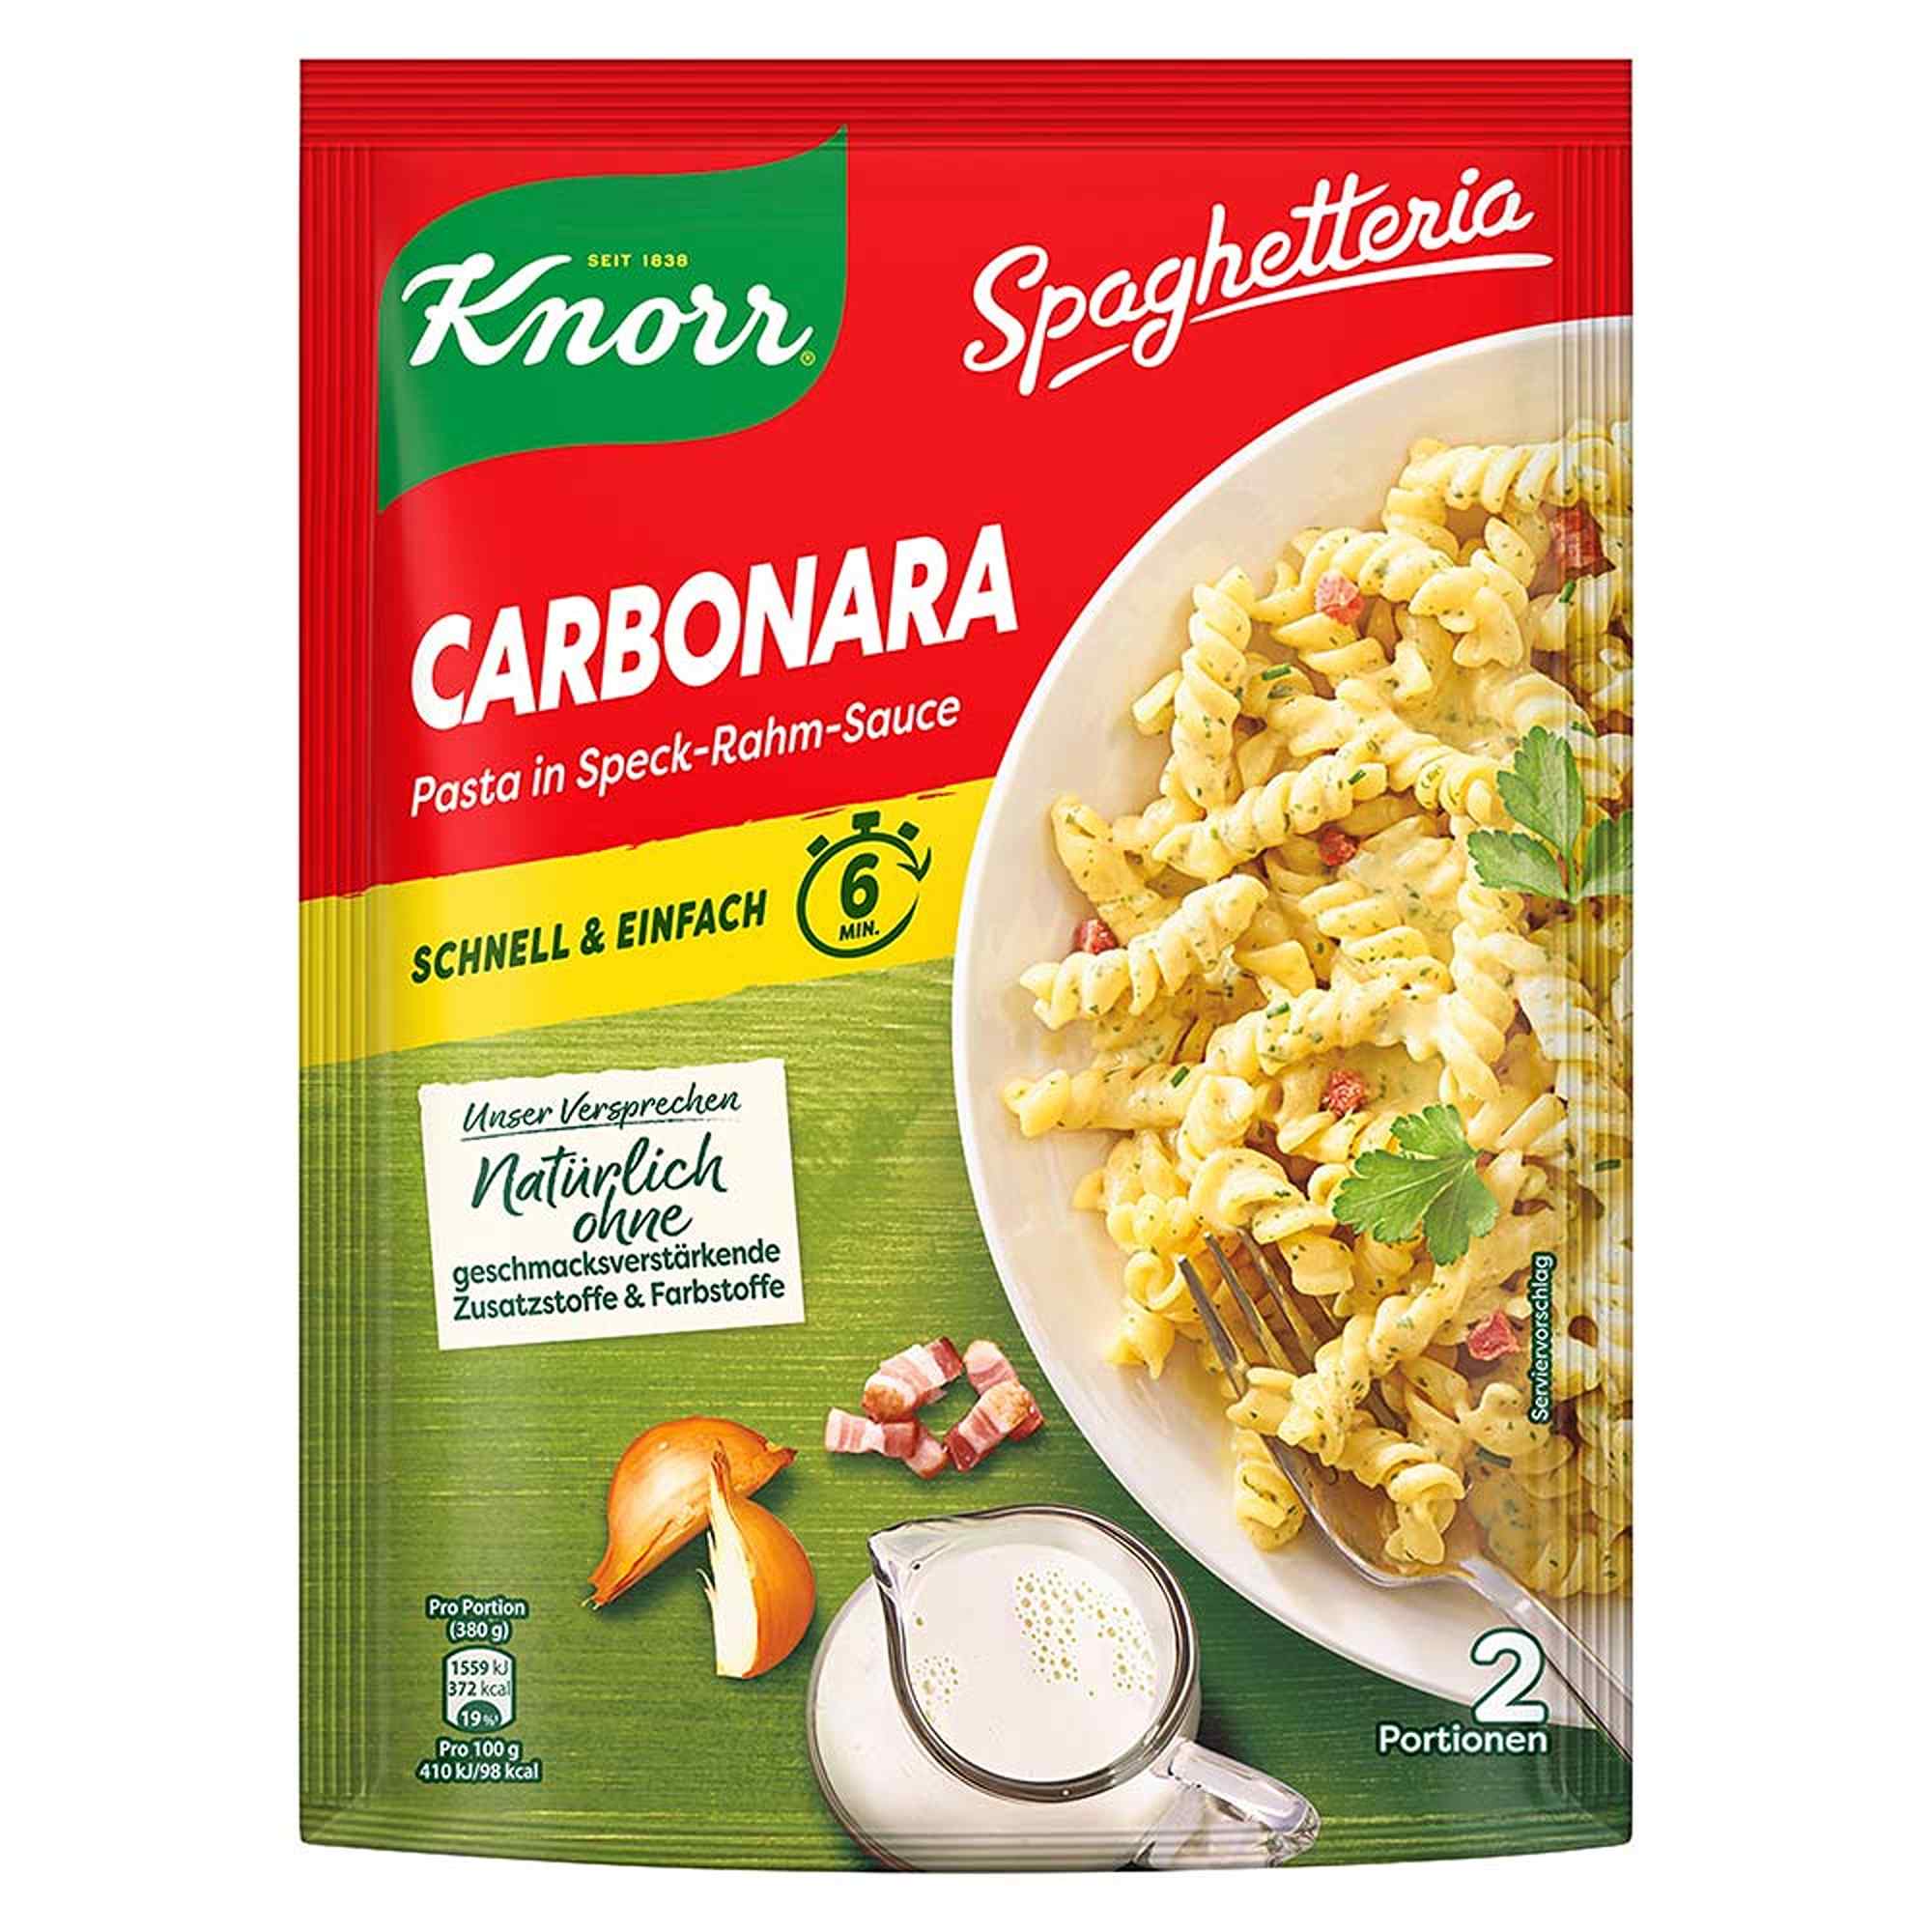 Buy Knorr Spaghetteria Carbonara pasta ready meal 190g bag online